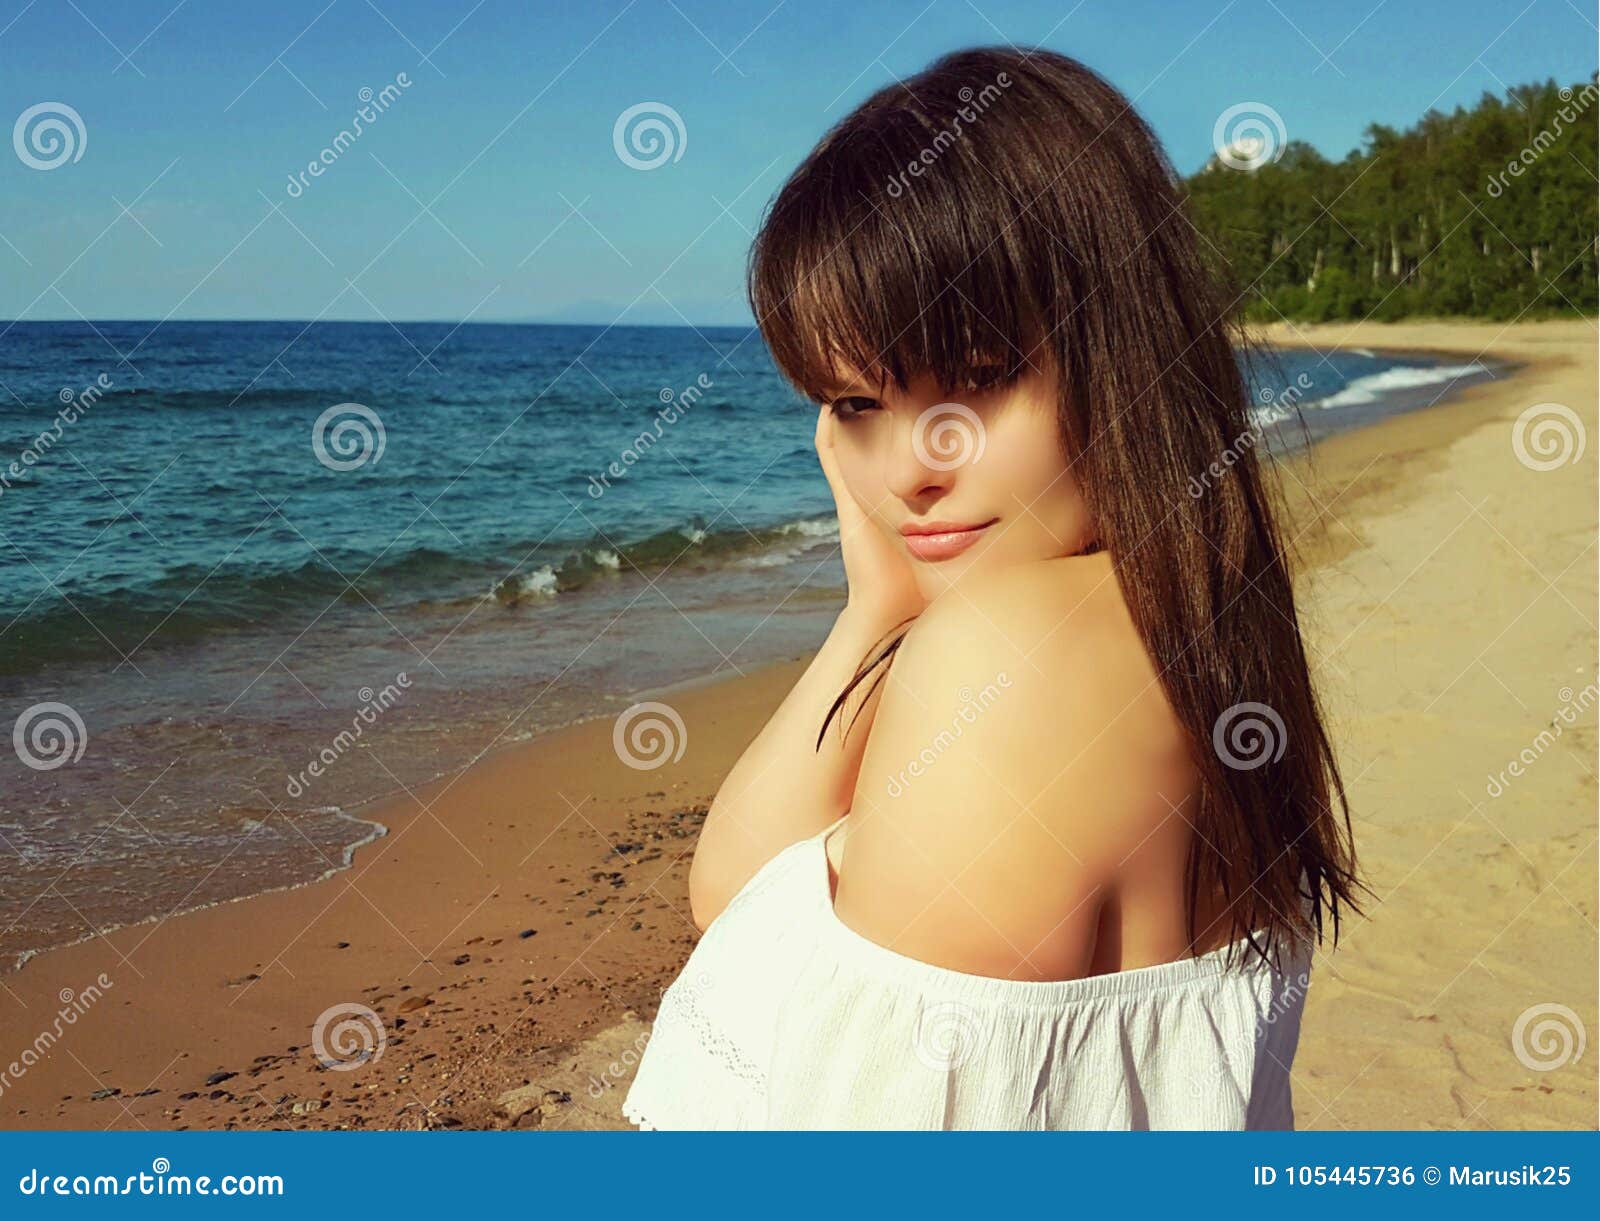 Beautiful Young Woman at Summer Beach. Portrait of Beautiful Woman